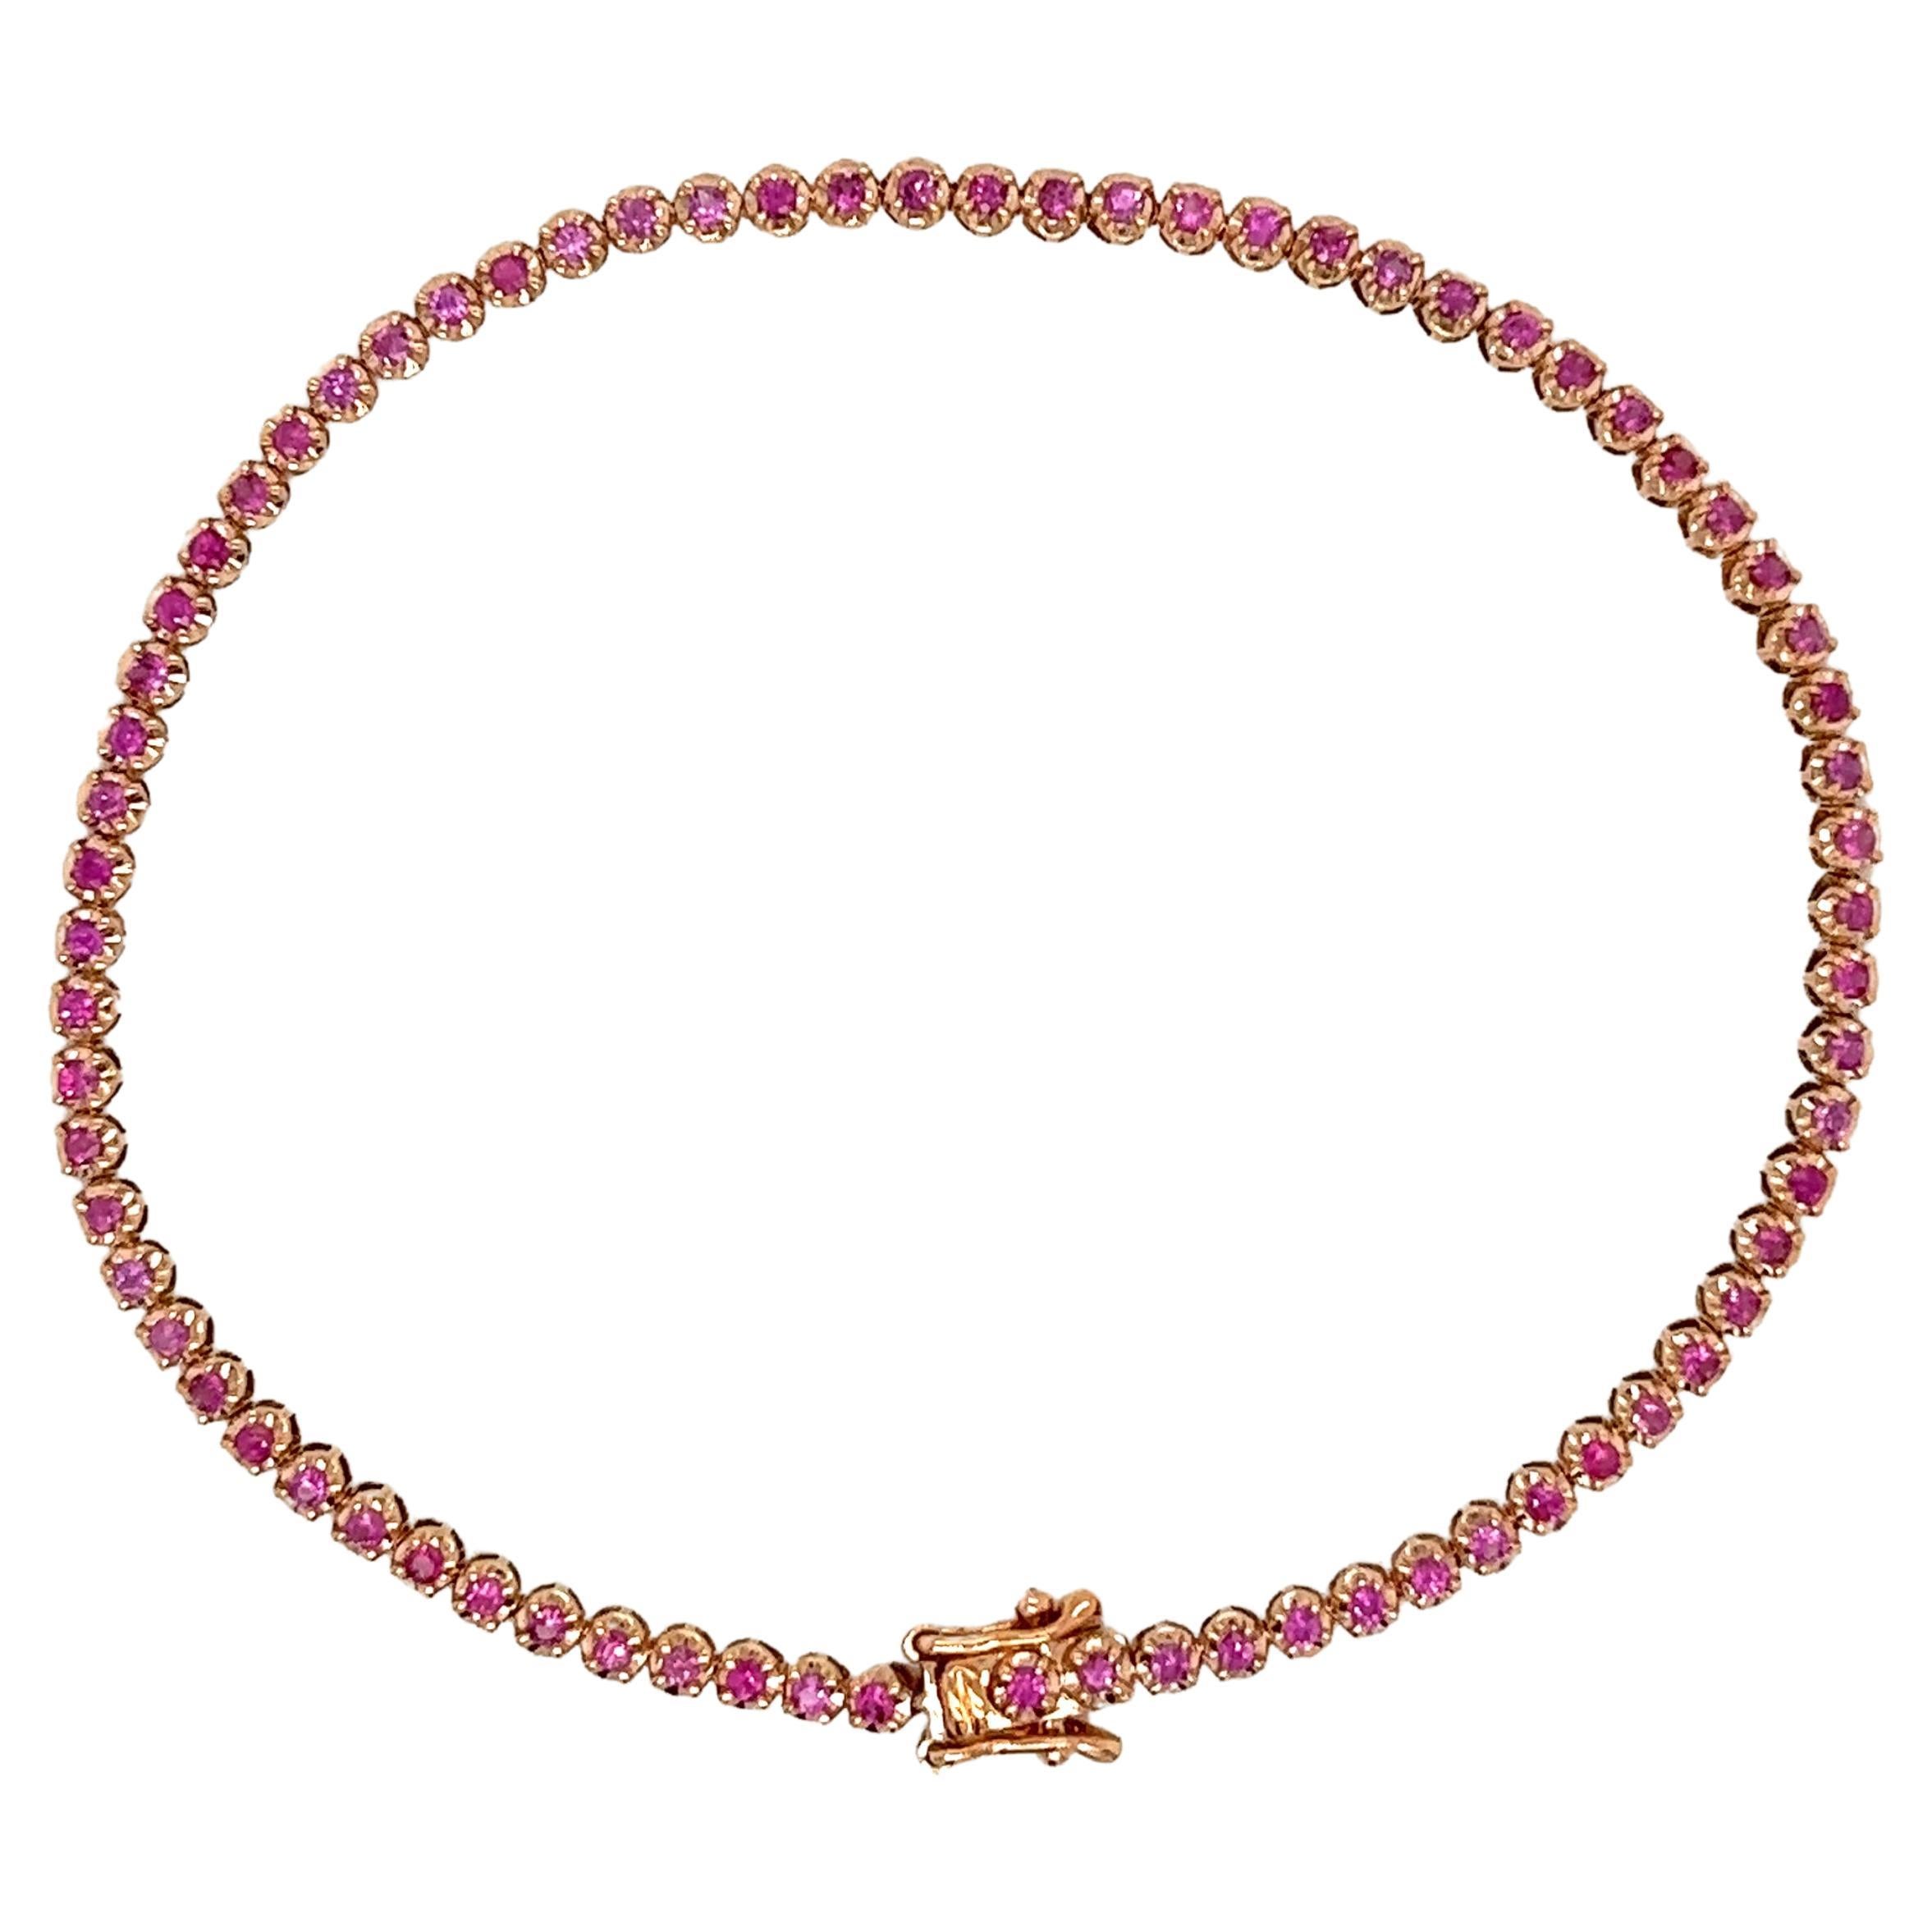 1 Carat Prong Set Round Cut Pink Sapphire Tennis Bracelet in 14Kt Rose Gold